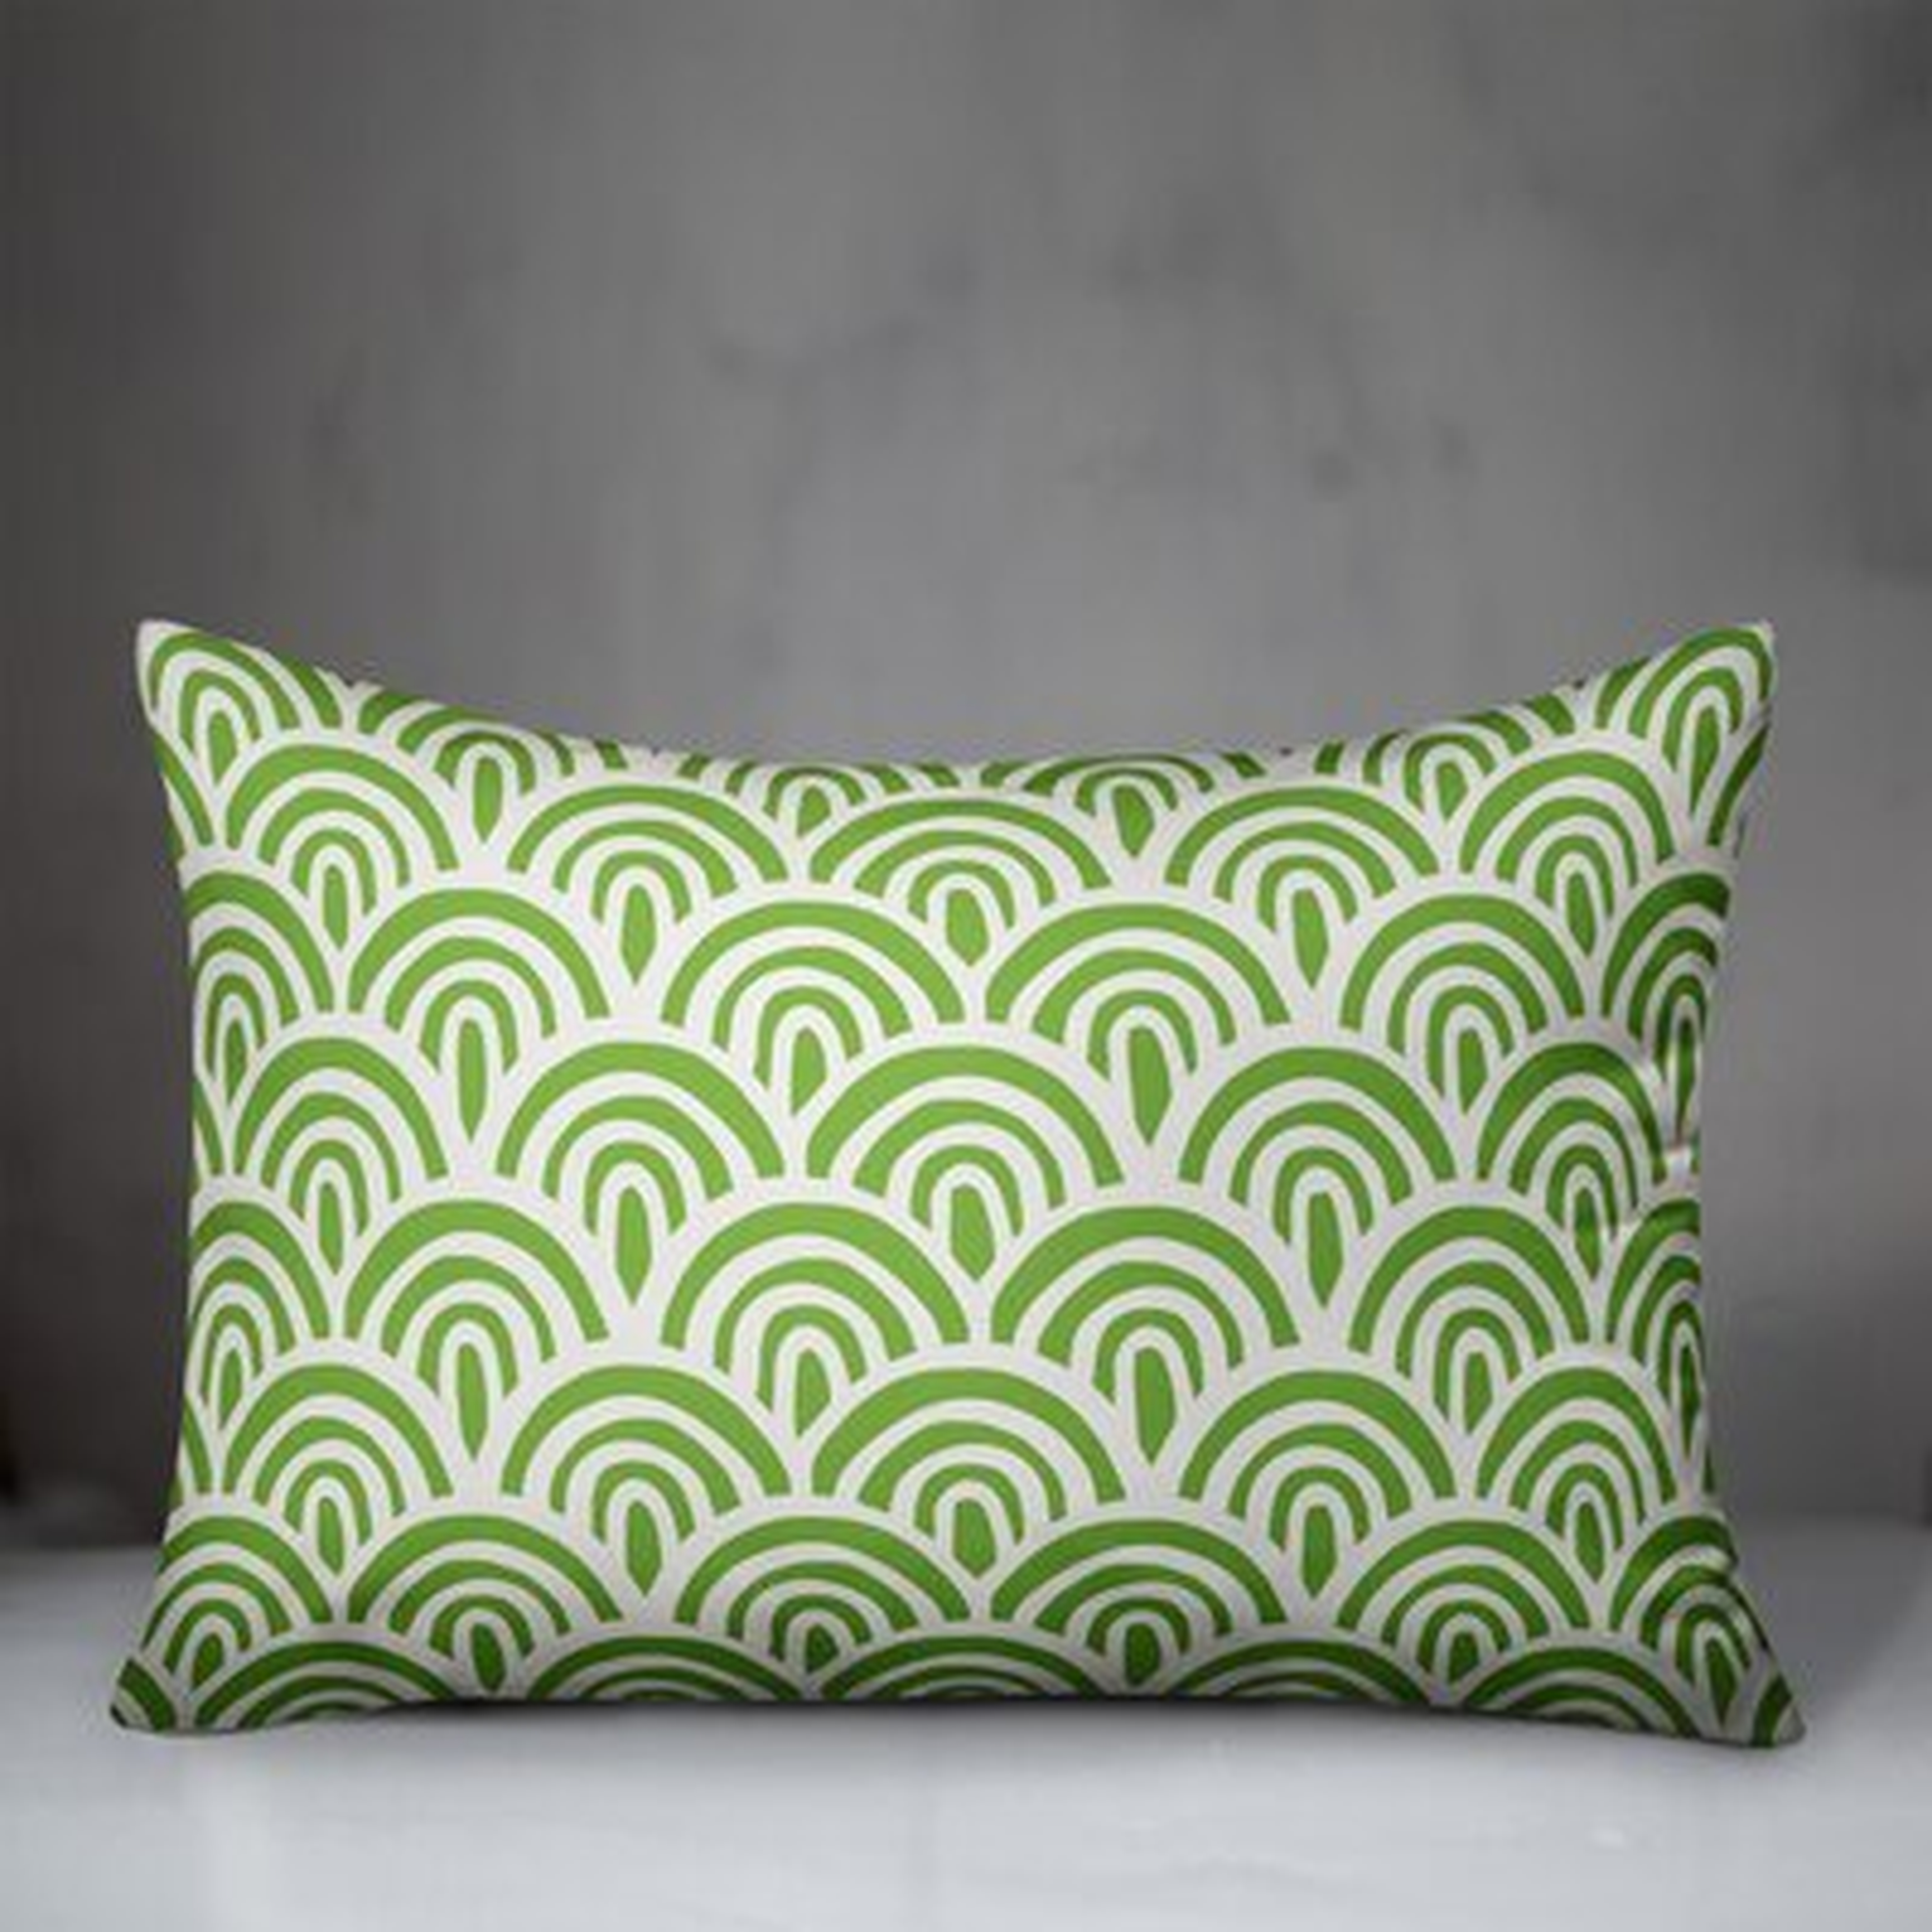 Mcclung Abstract Scallop Indoor/Outdoor Lumbar Pillow - Wayfair